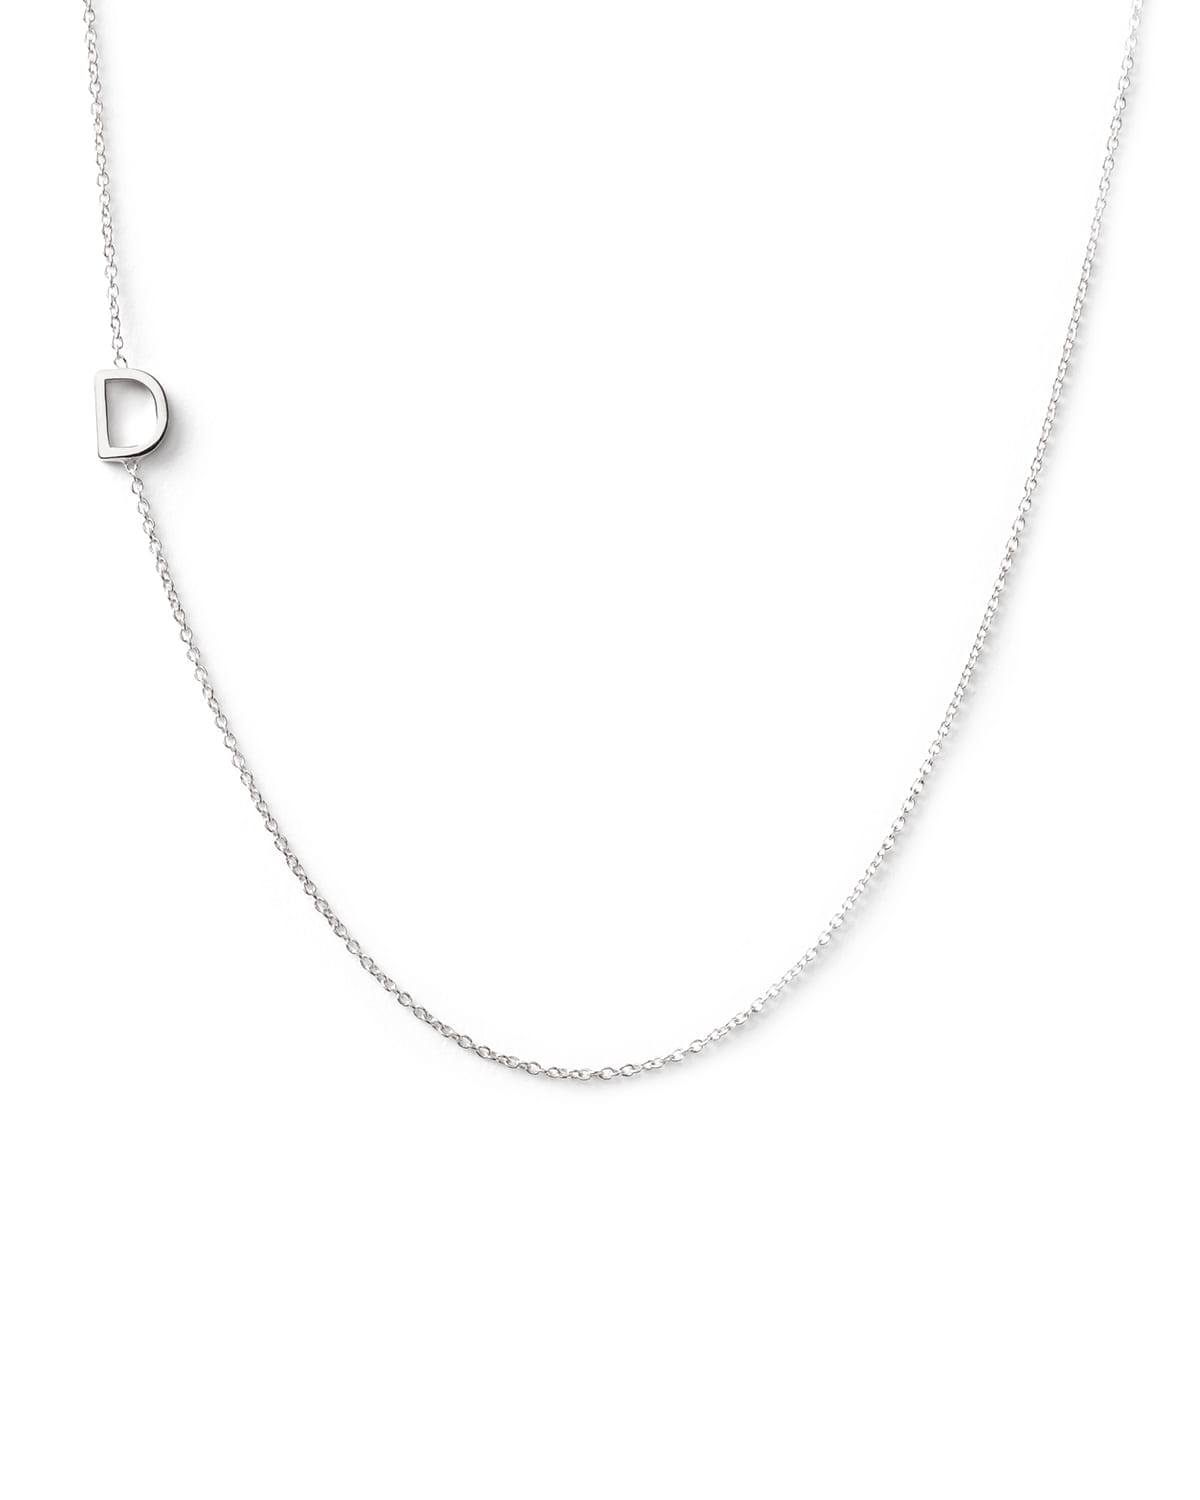 Maya Brenner Designs 14k White Gold Mini Letter Necklace In D